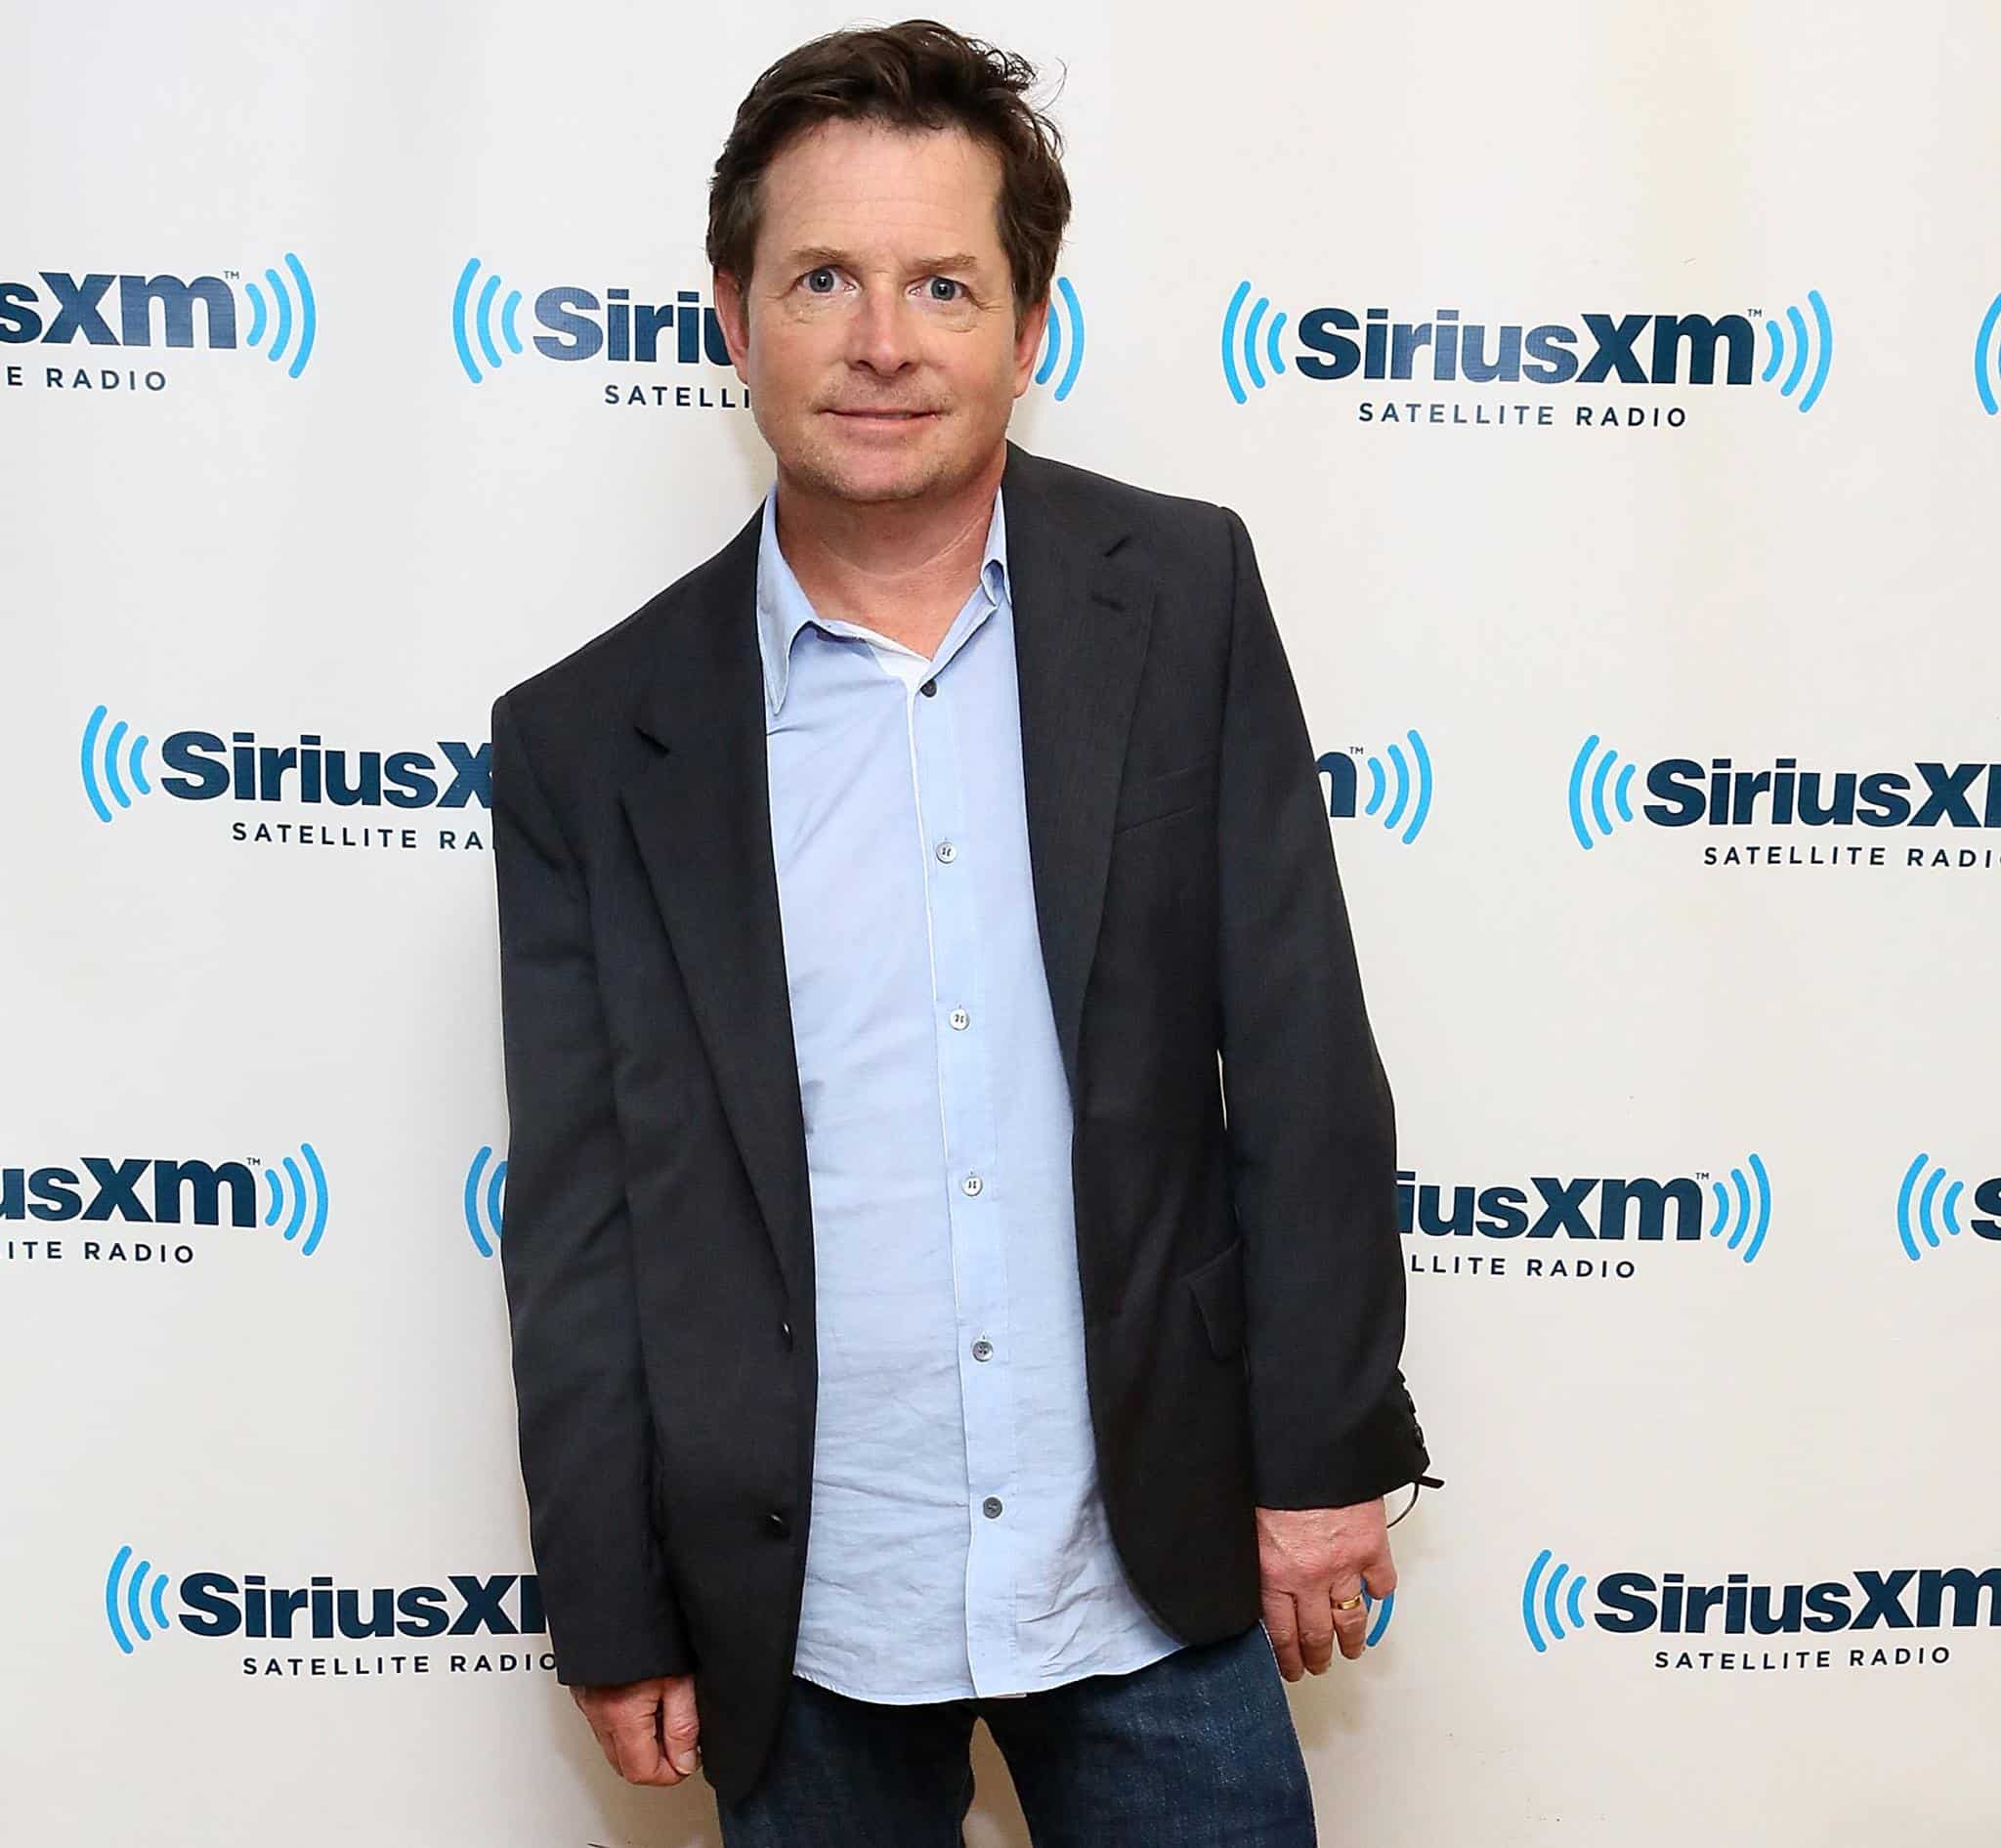 Michael J. Fox: I Drank Heavily to Cope With Parkinsonâs Diagnosis